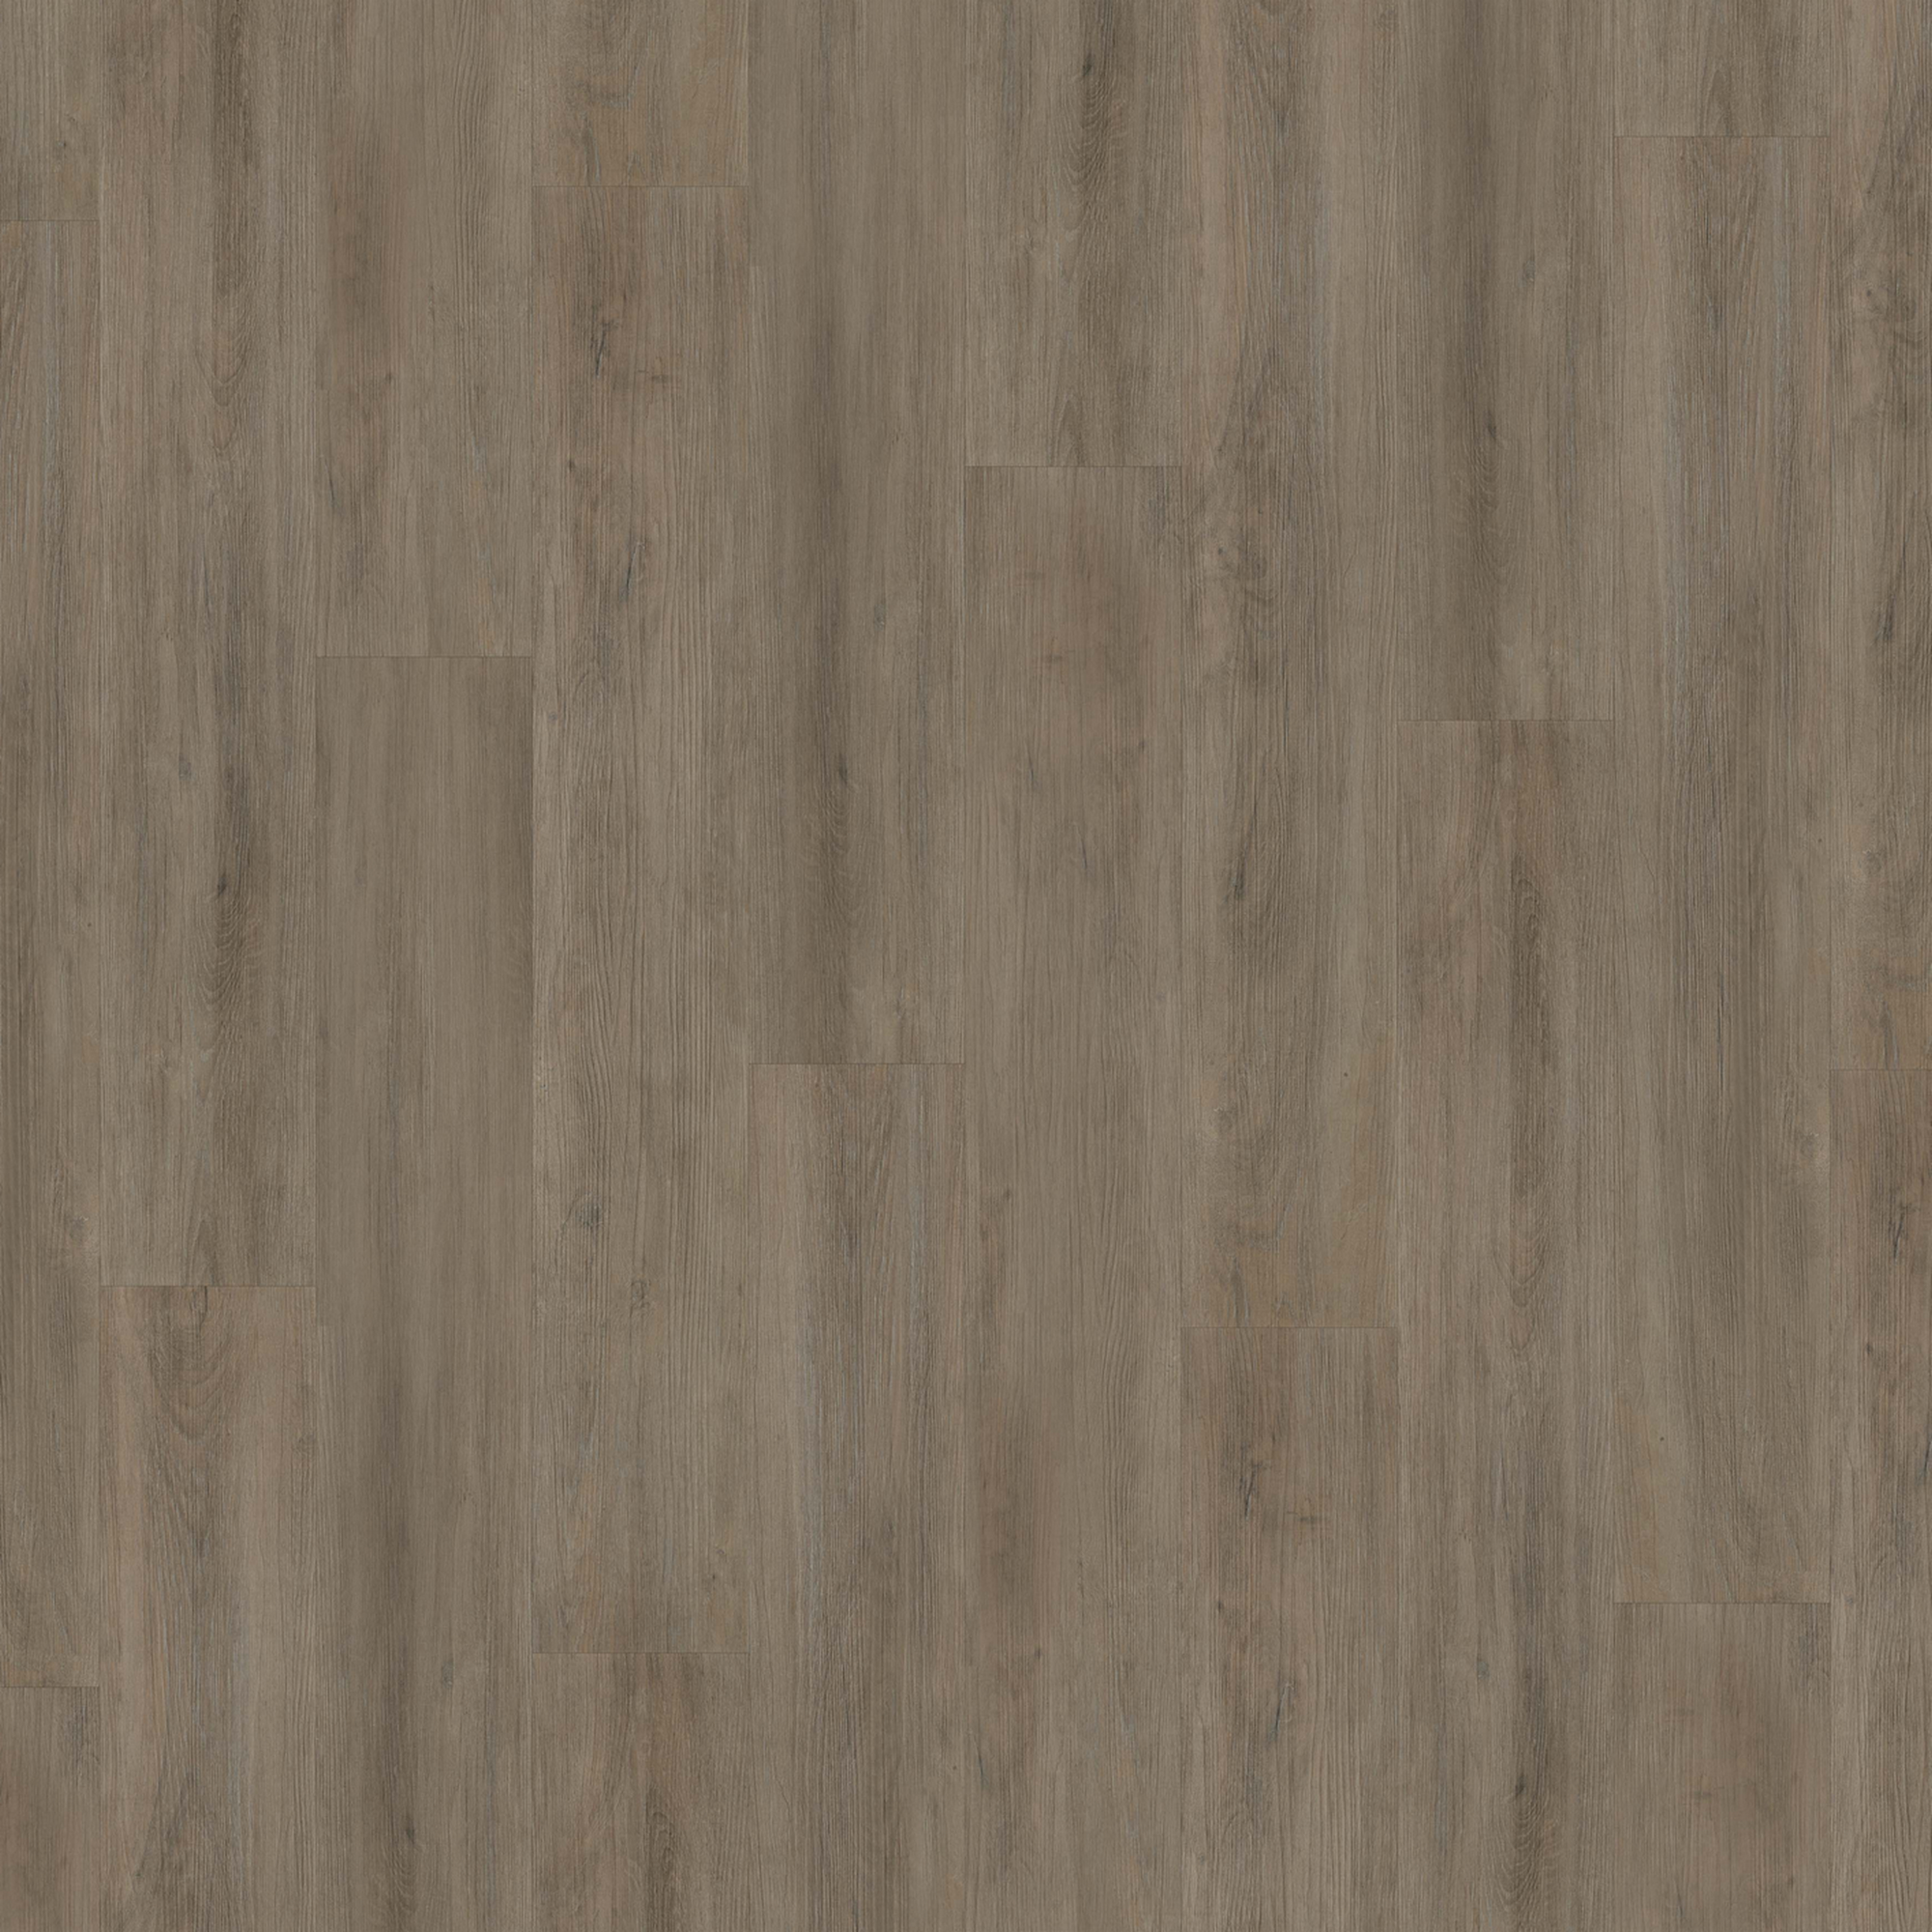 Vinylboden 'Rigid' Corton Oak braun 4 mm + product picture